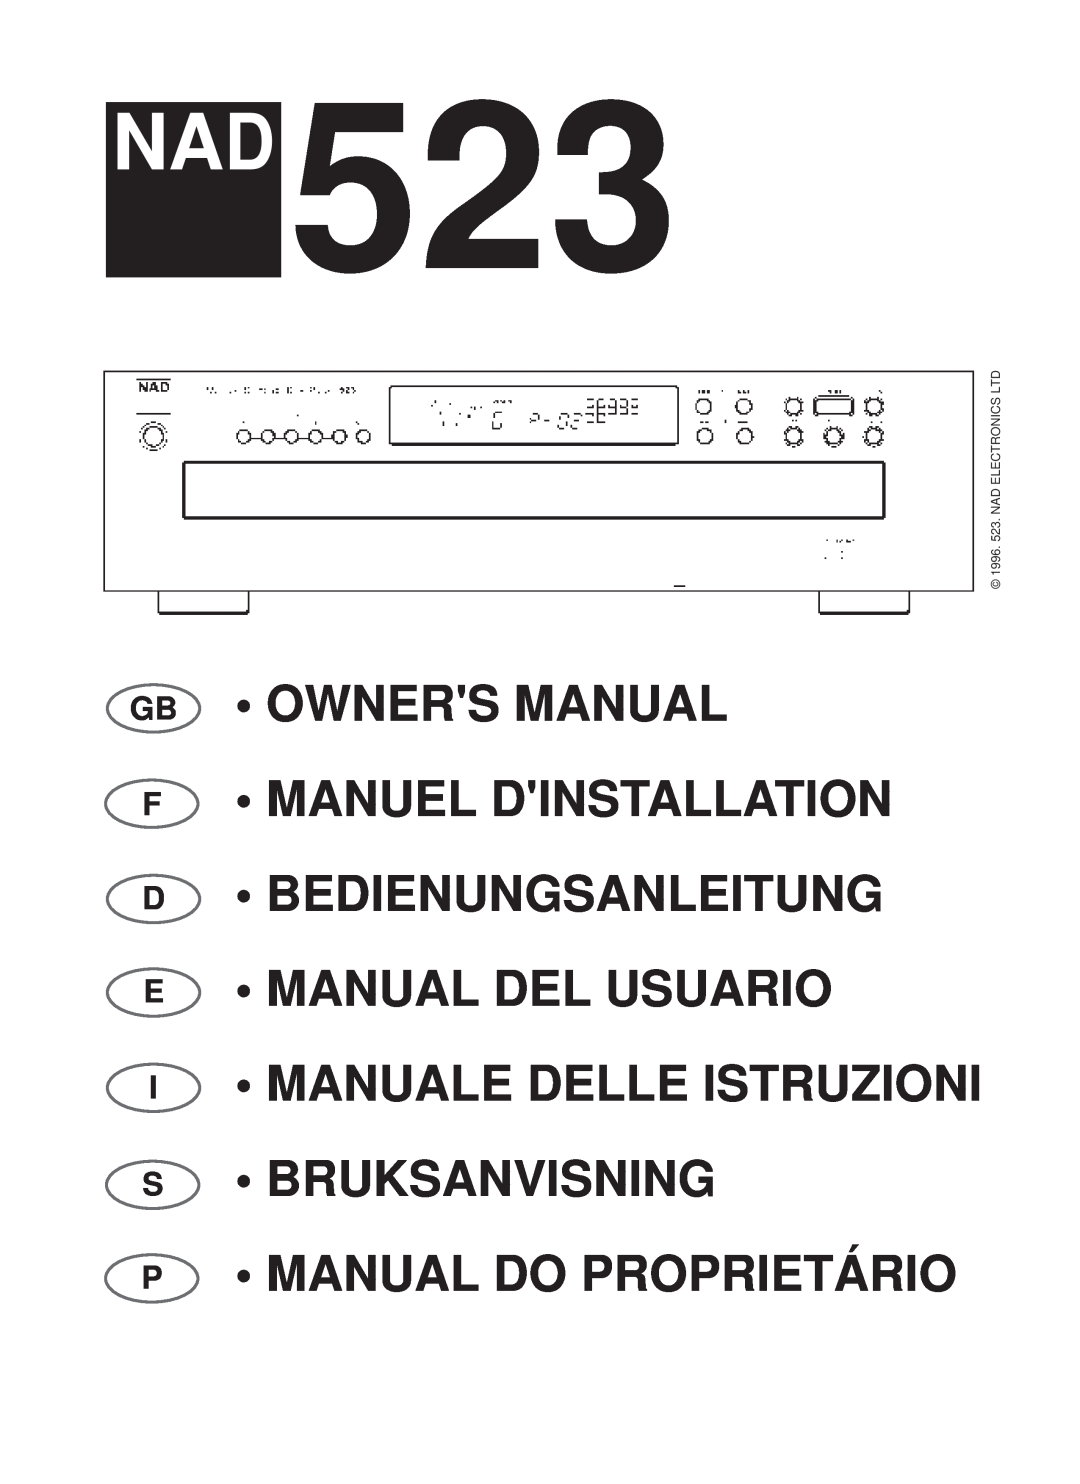 NAD 523 owner manual Gb F D E I S P, •Owners Manual •Manuel Dinstallation, •Bedienungsanleitung •Manual Del Usuario 